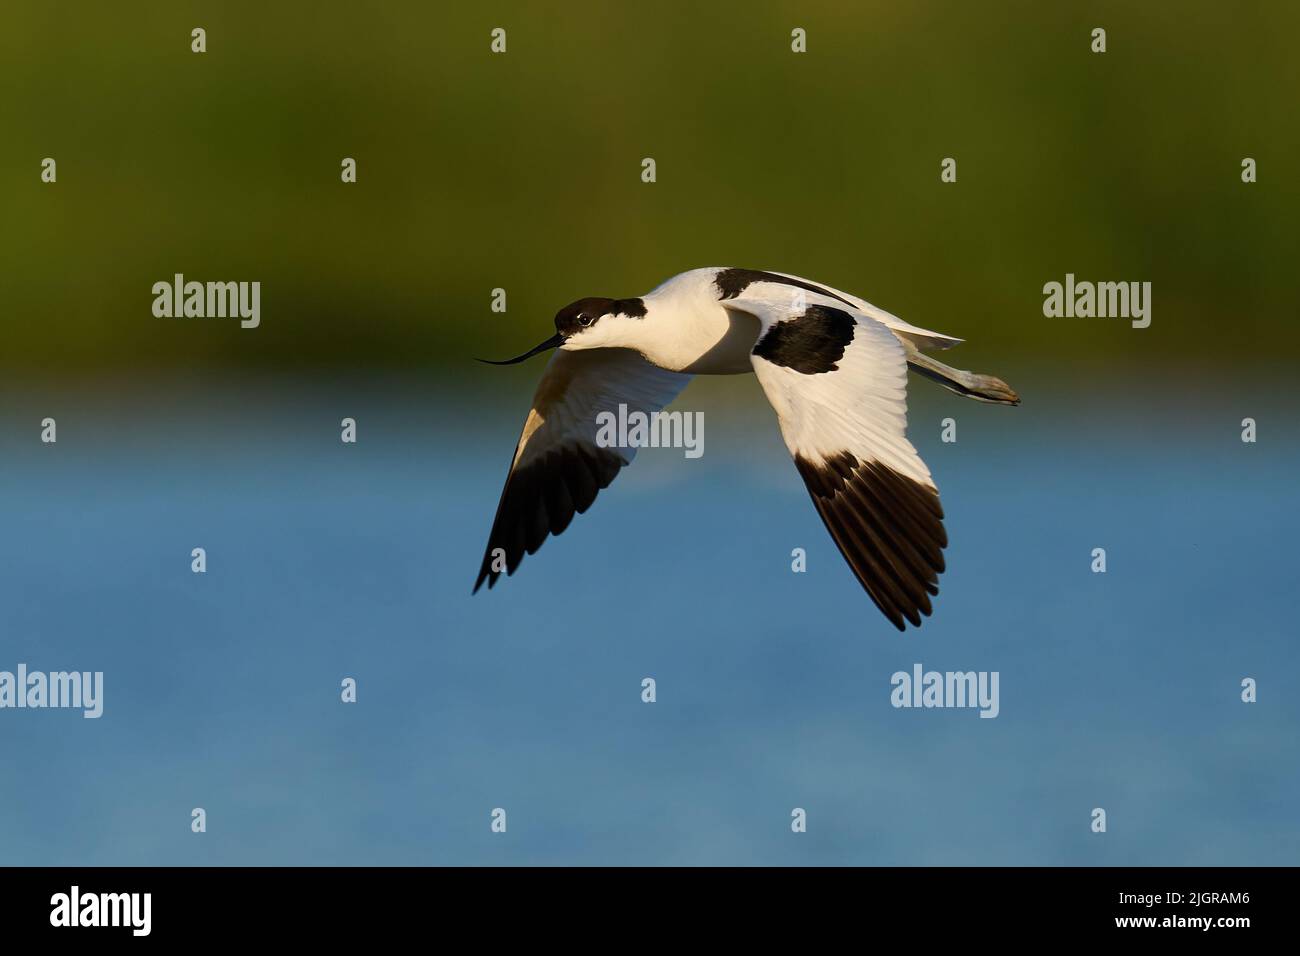 Pied avocet (Recurvirostra avosetta) in its natural environment Stock Photo